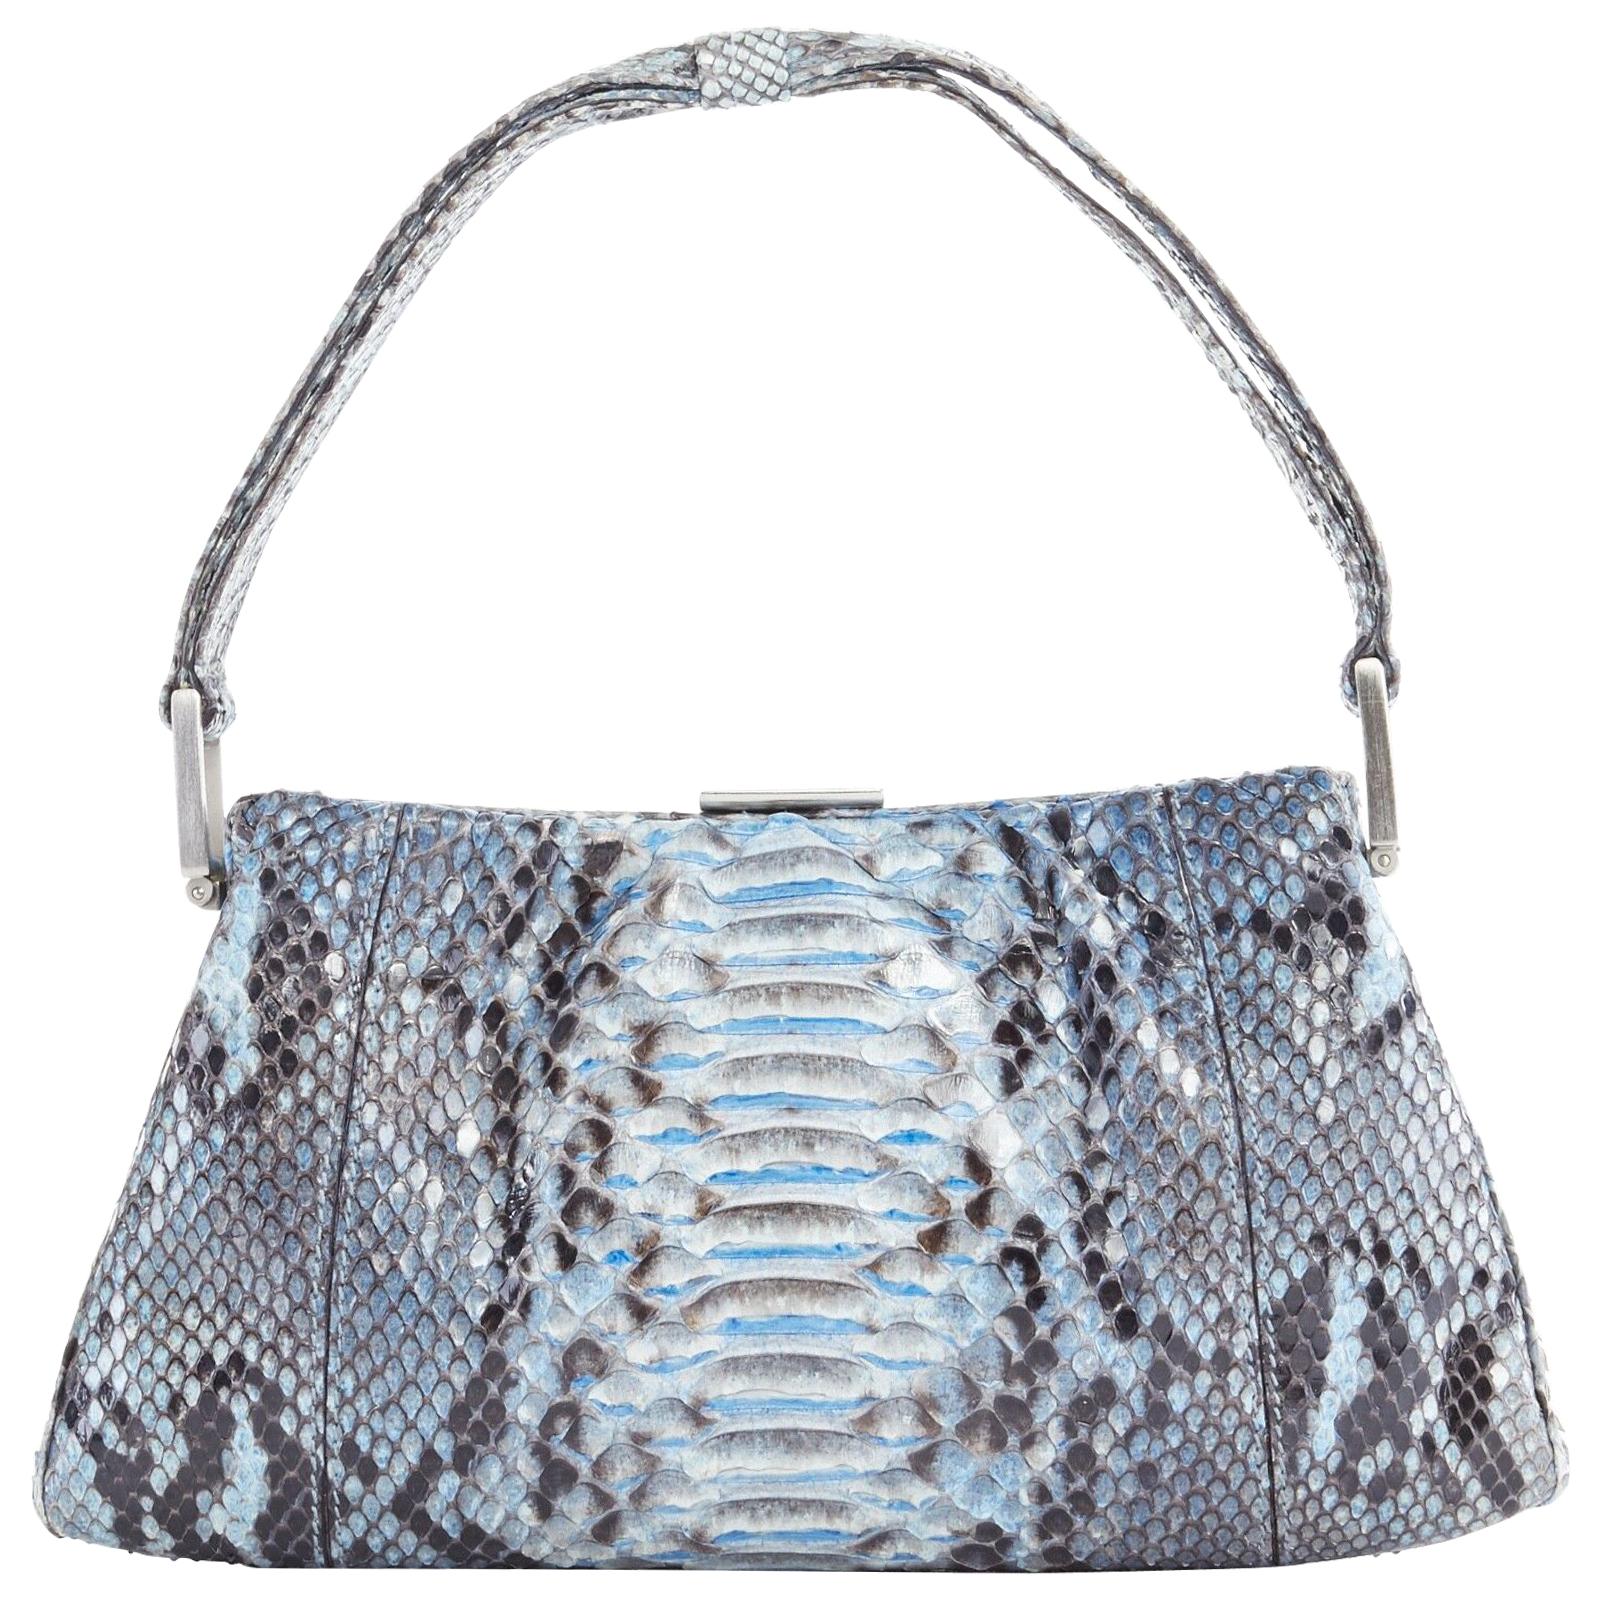 GIORGIO ARMANI holographic blue python leather top handle evening handbag bag